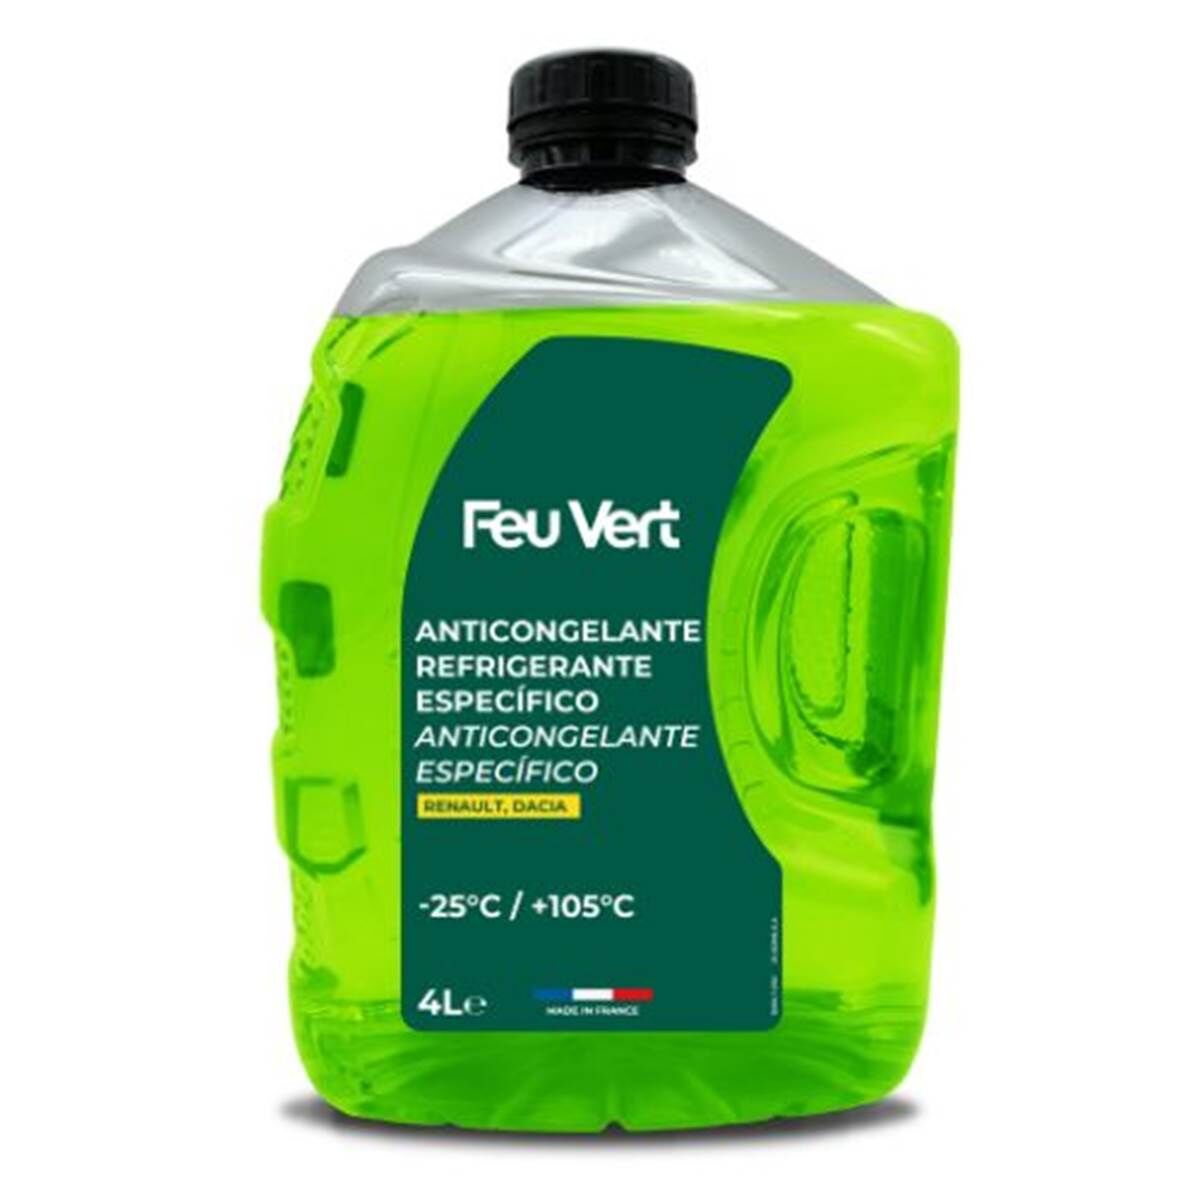 Feu Vert Anticongelante Refrigerante  -25ºc Renault 4l